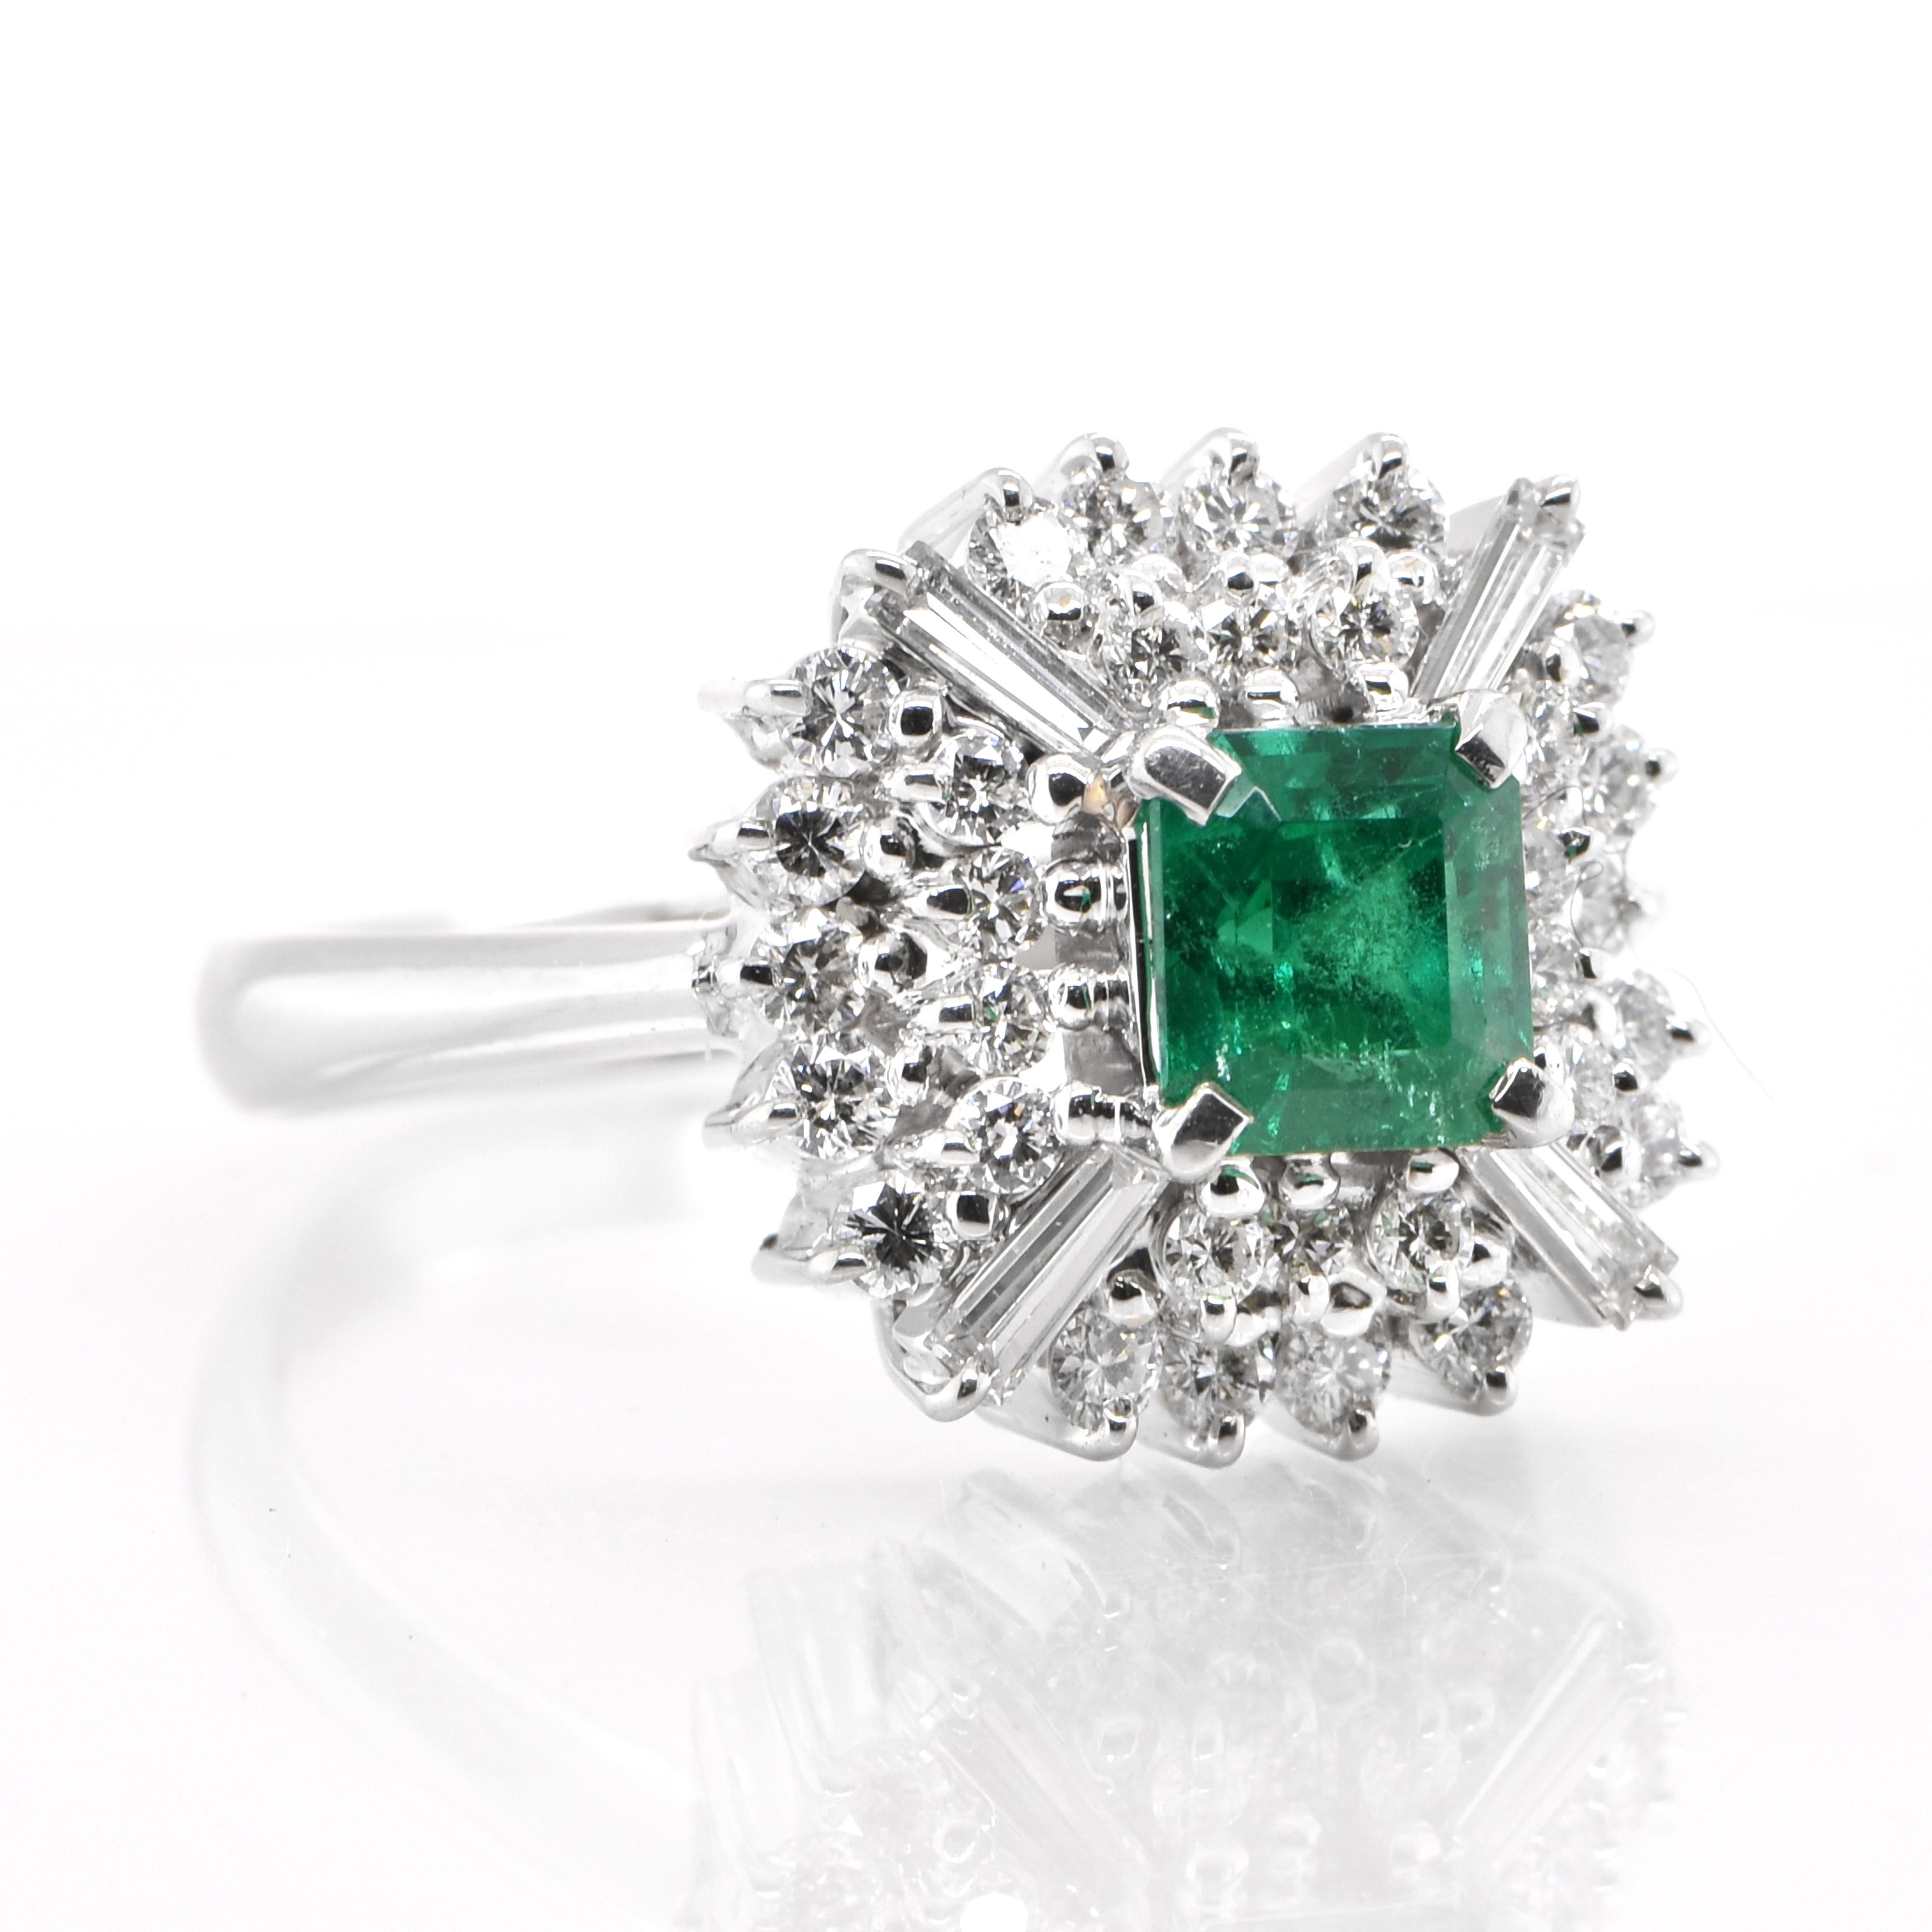 Emerald Cut Art Deco Inspired 0.41 Carat Natural Emerald and Diamond Ring Set in Platinum